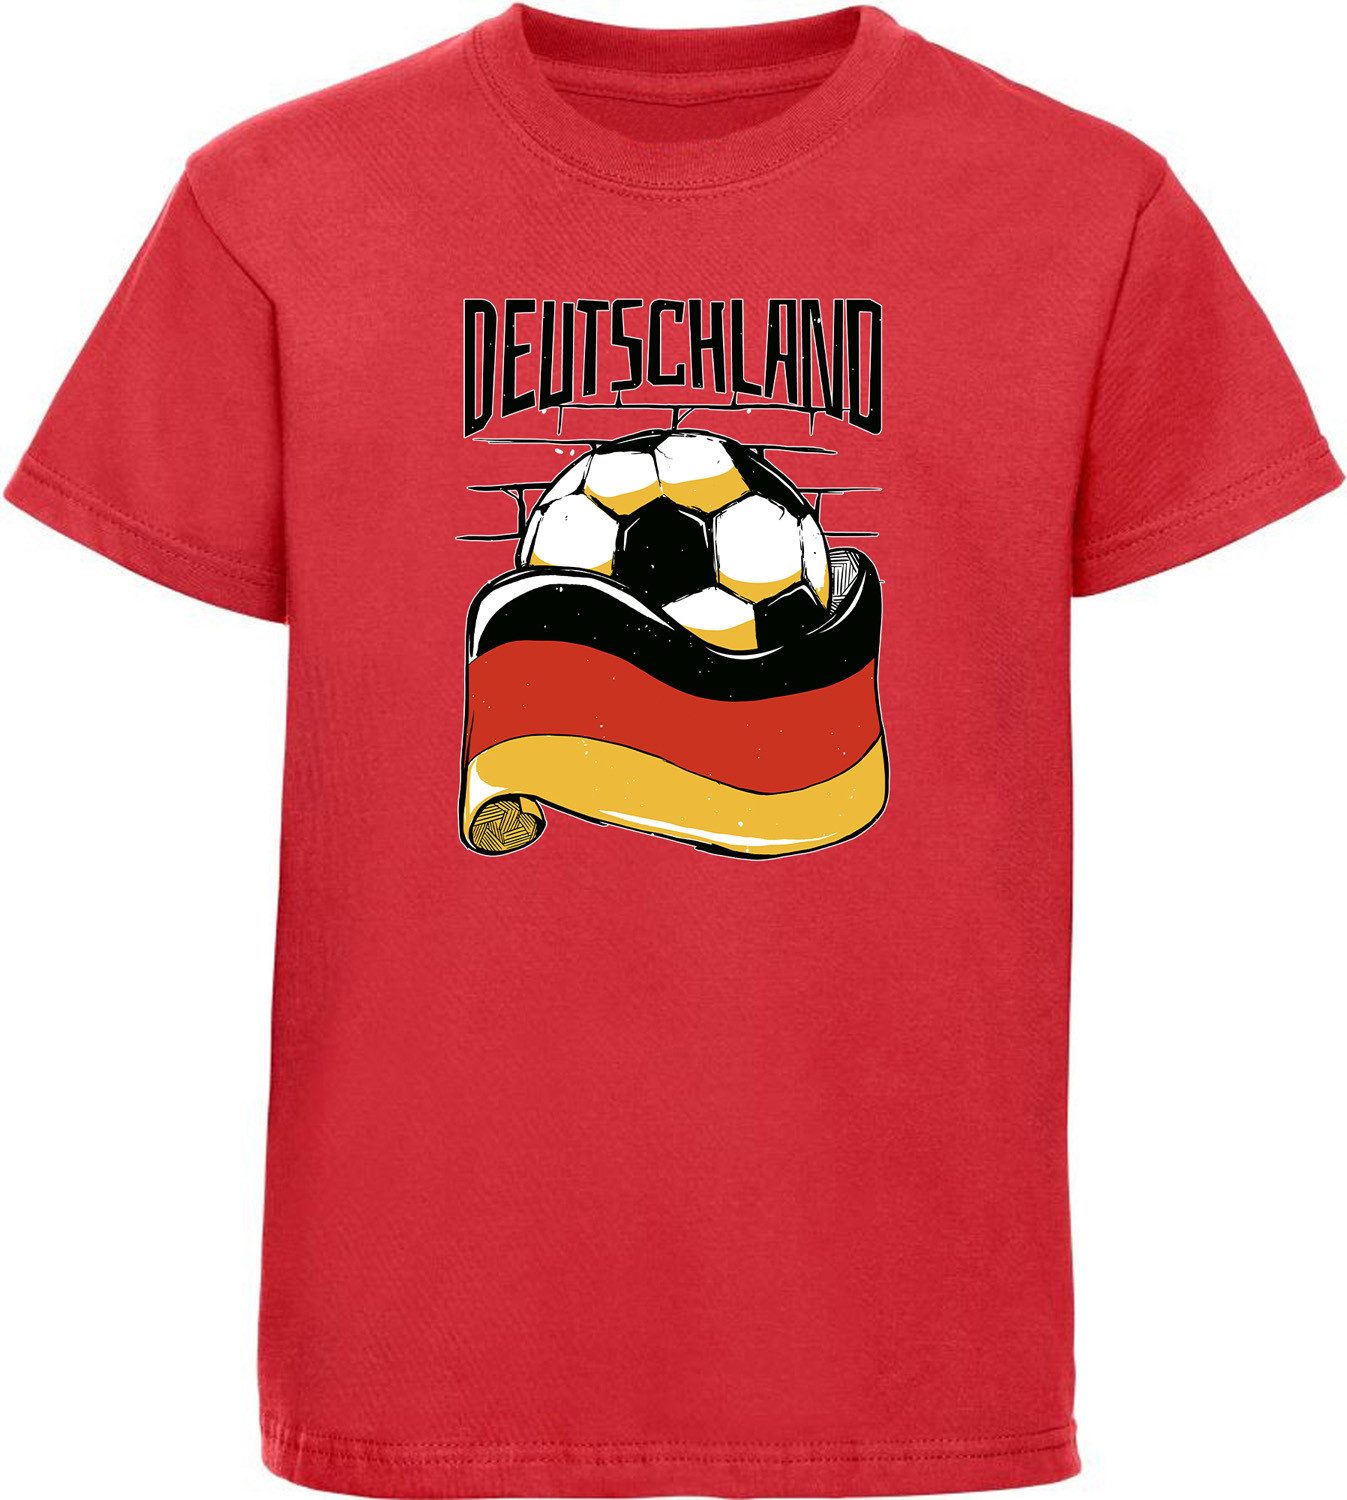 MyDesign24 T-Shirt Kinder Fussball Print Shirt - Deutschland Fahne mit Fussball Bedrucktes Jungen und Mädchen Fussball T-Shirt, i485